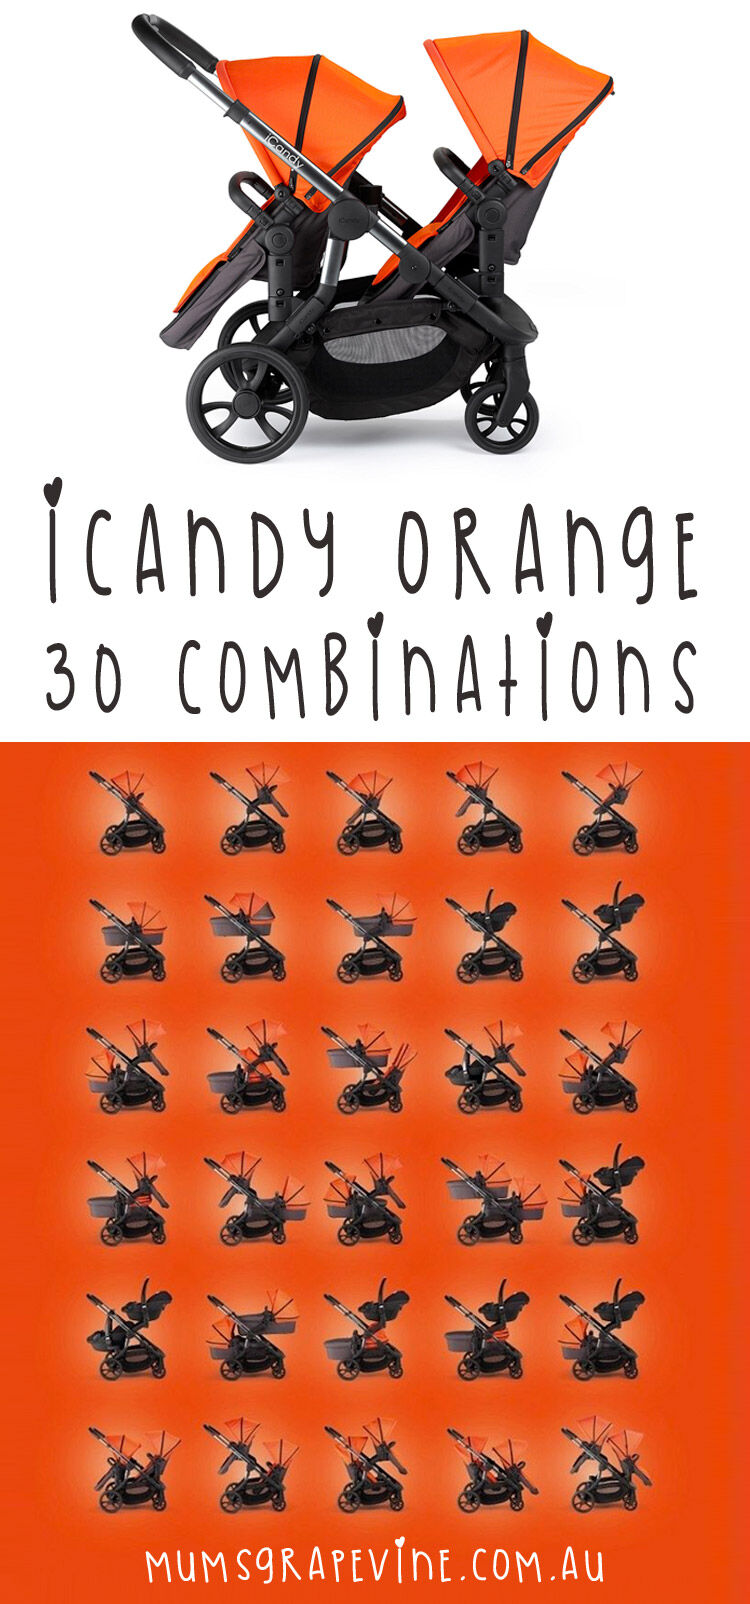 iCandy Orange combinations